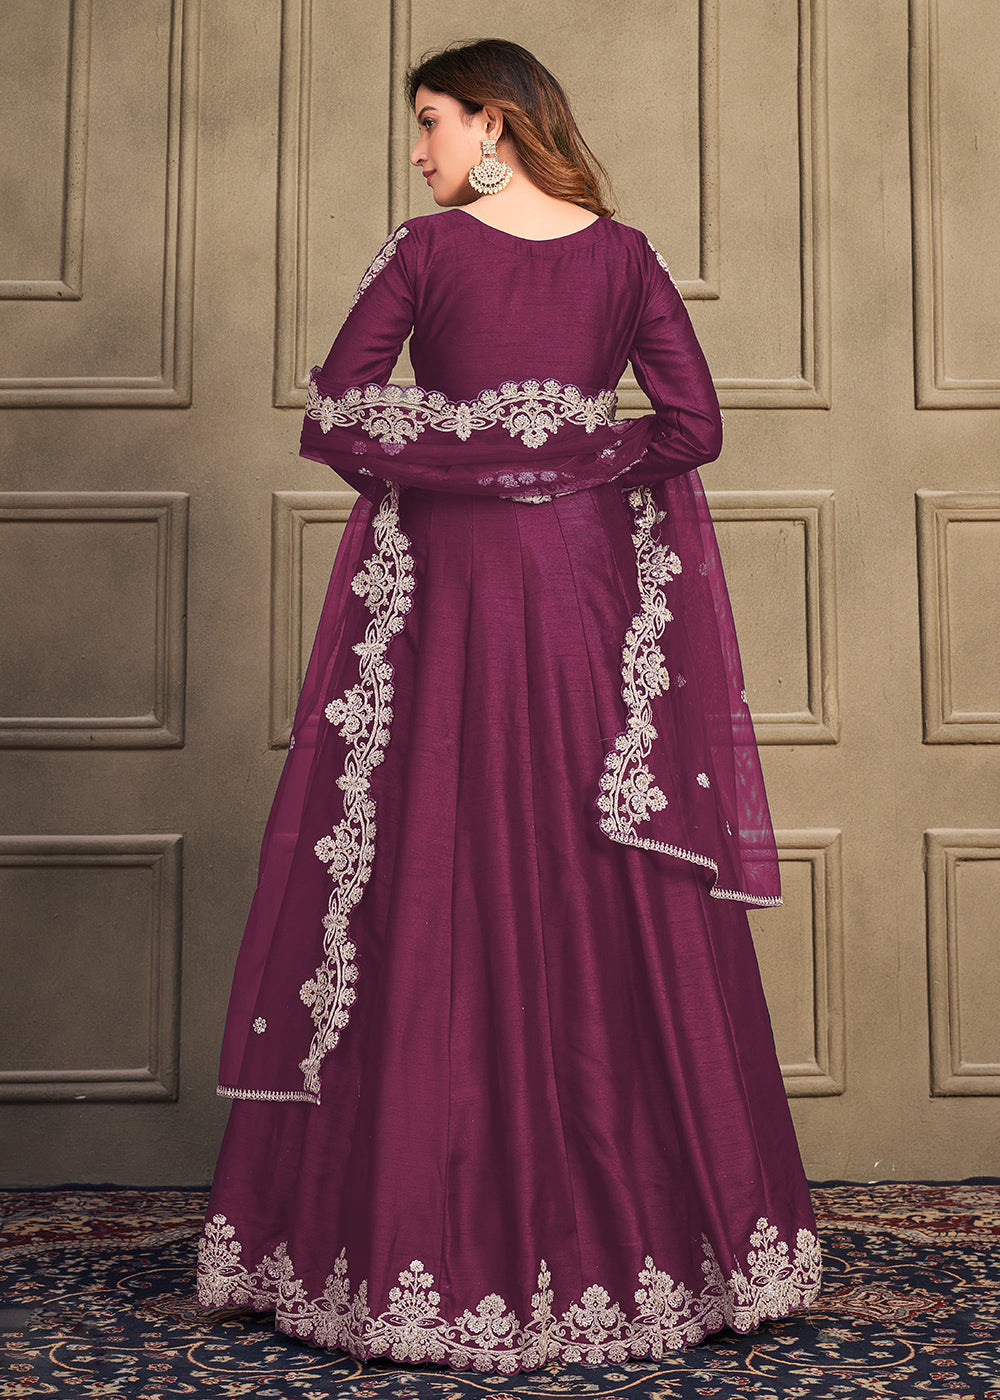 Buy Now Stylish Plum Purple Art Silk Floor Length Anarkali Dress Online in USA, UK, Australia, New Zealand, Canada & Worldwide at Empress Clothing.